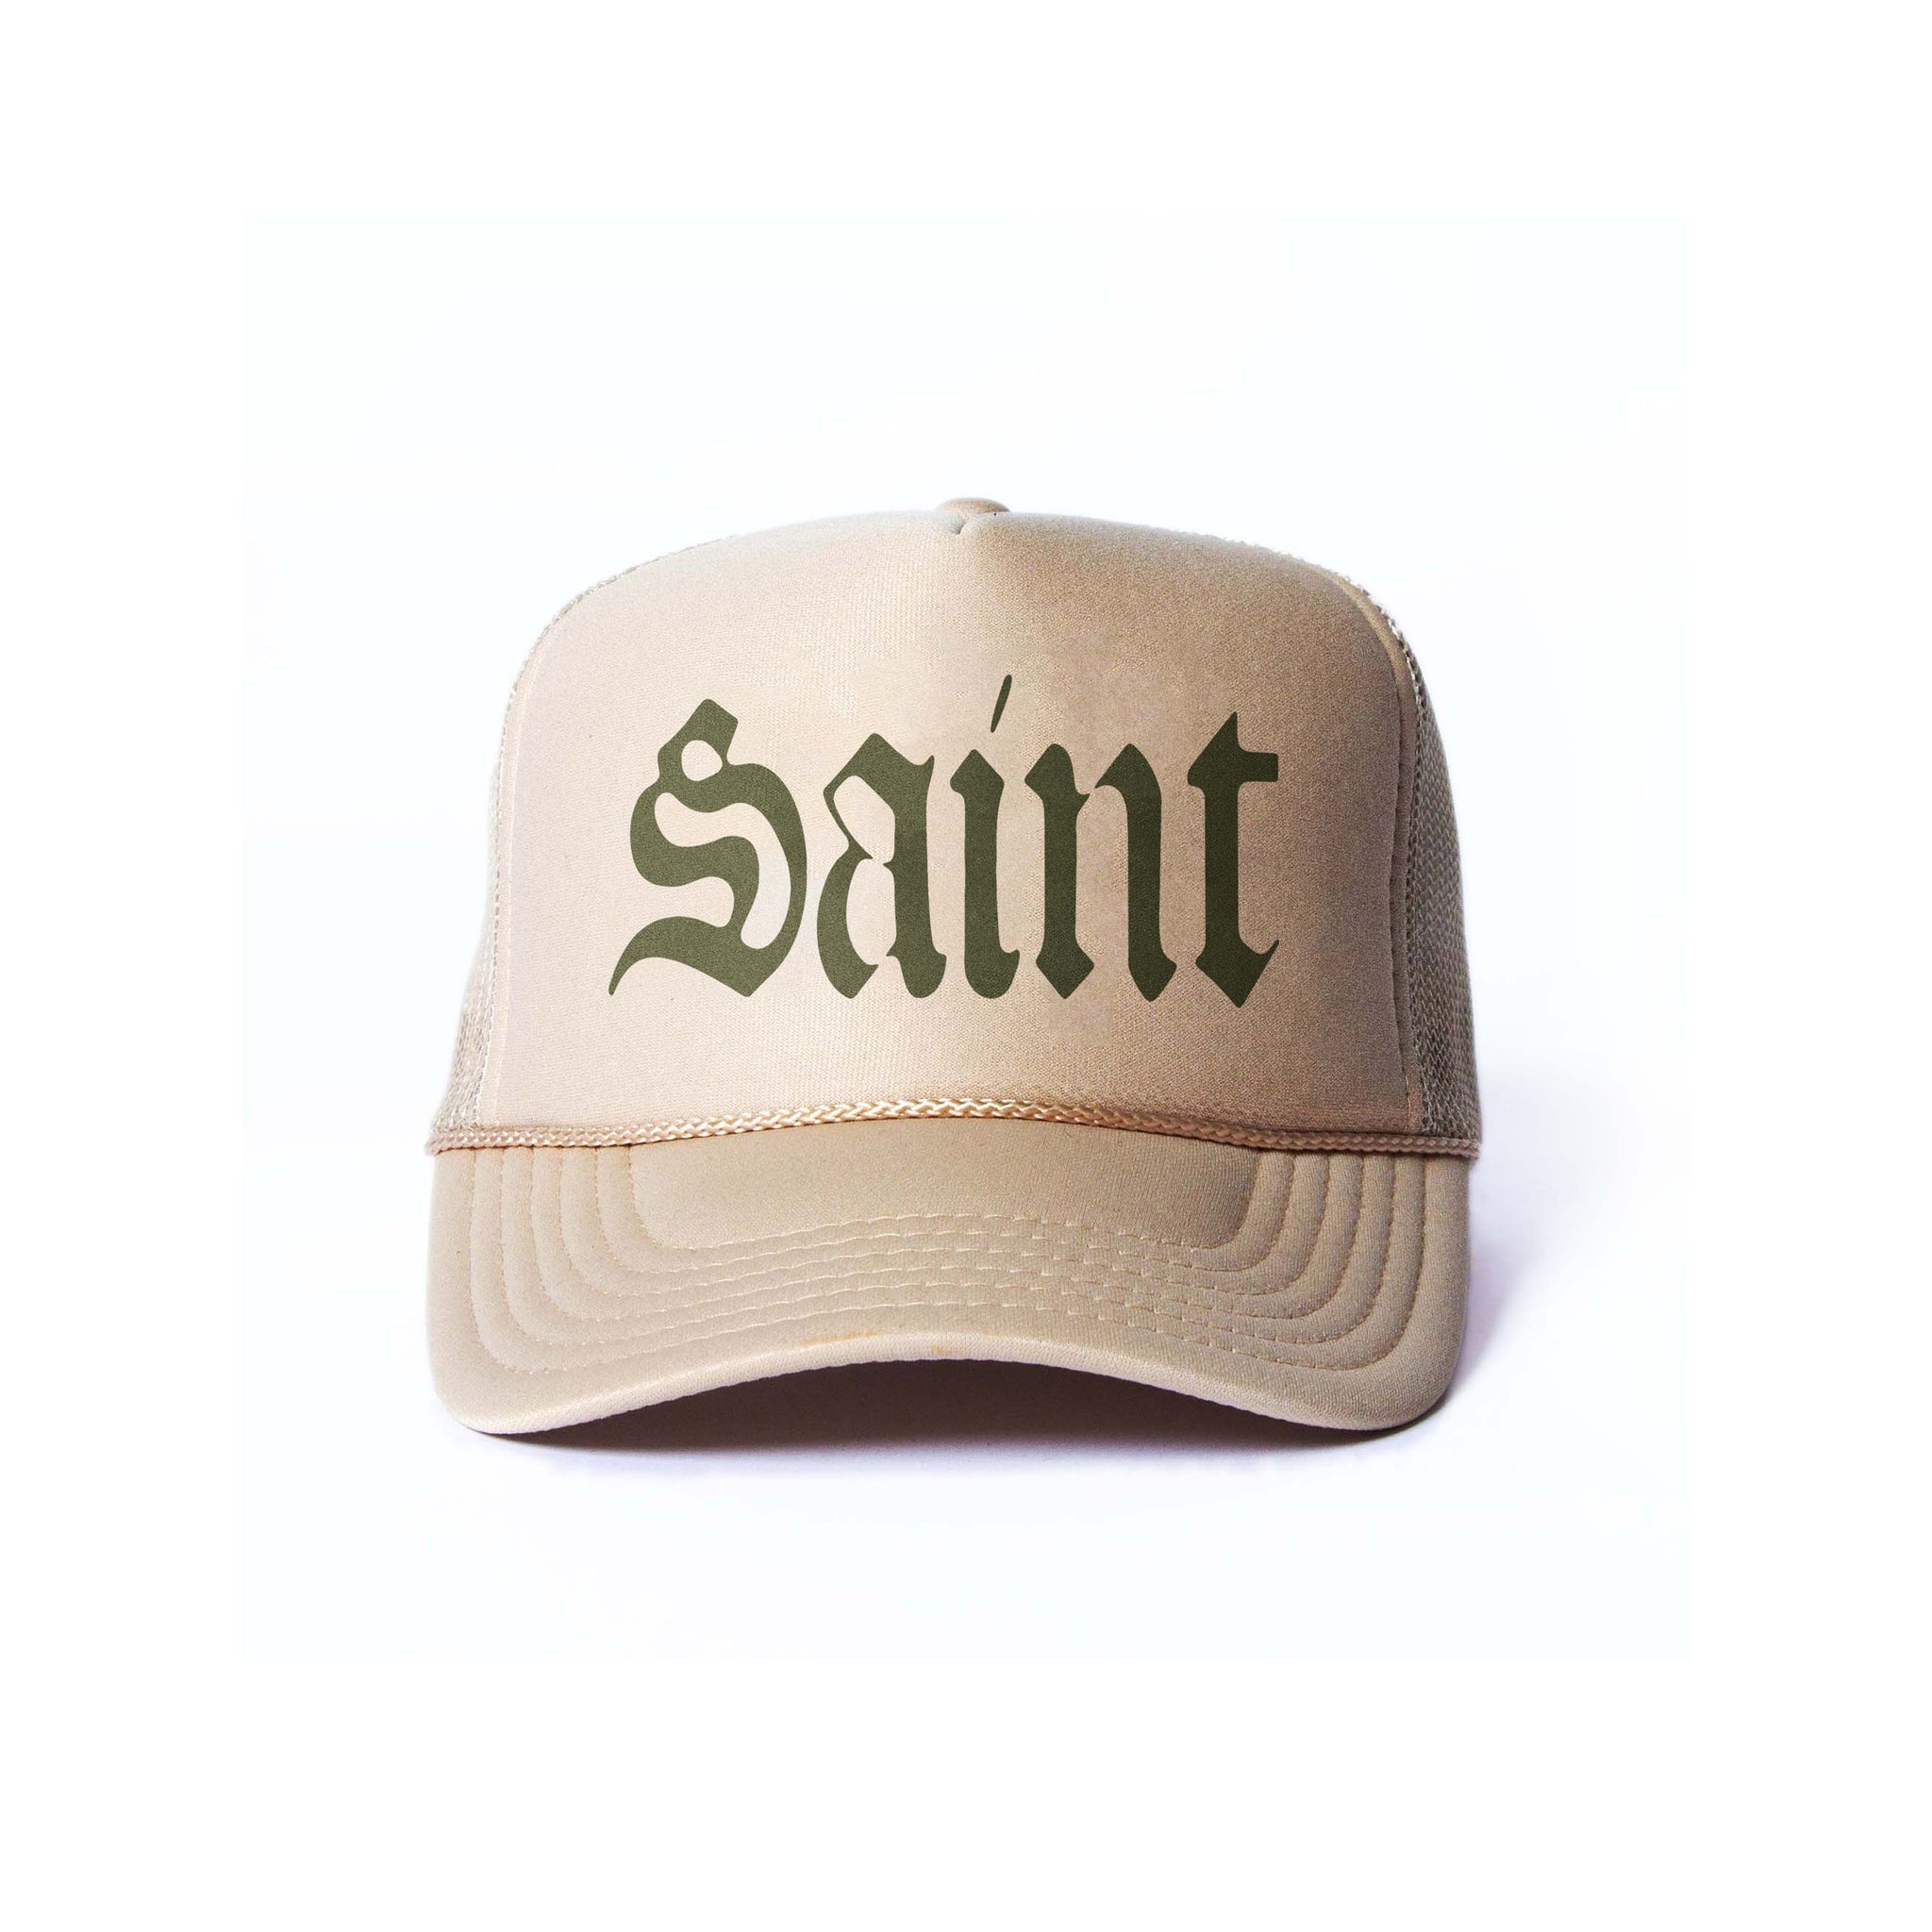 "Saint" Trucker Hat